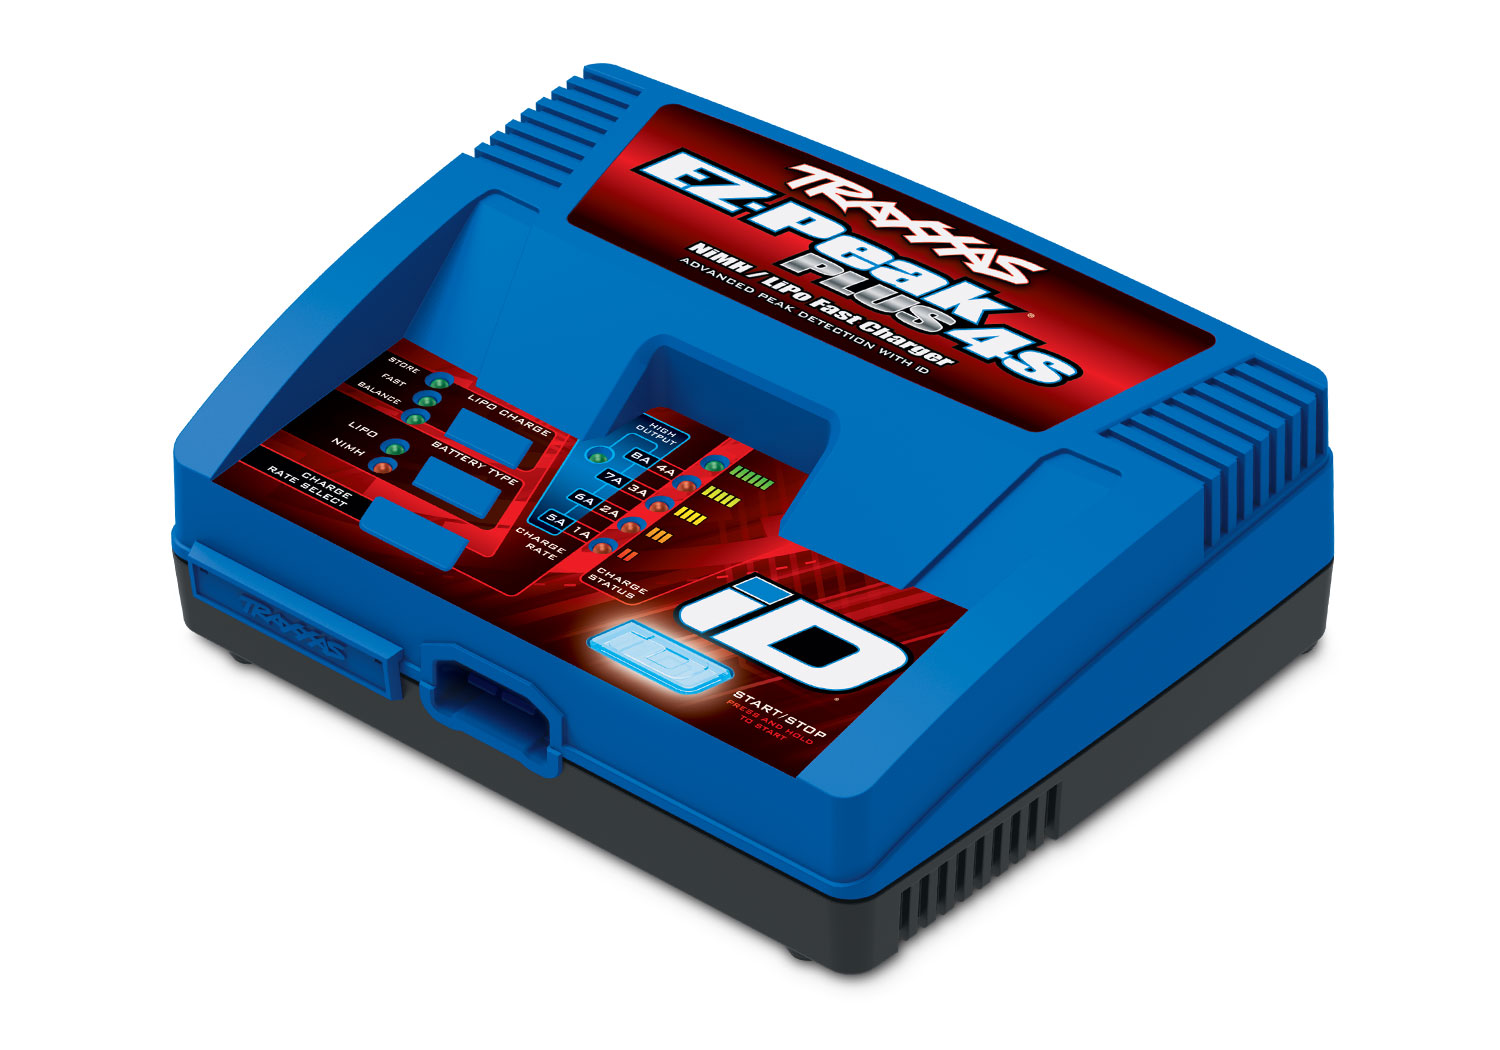 Traxxas Charger, EZ-Peak Plus 4s, 8 amp, NiMH/LiPo with iD Auto Battery Identification - TRX2981